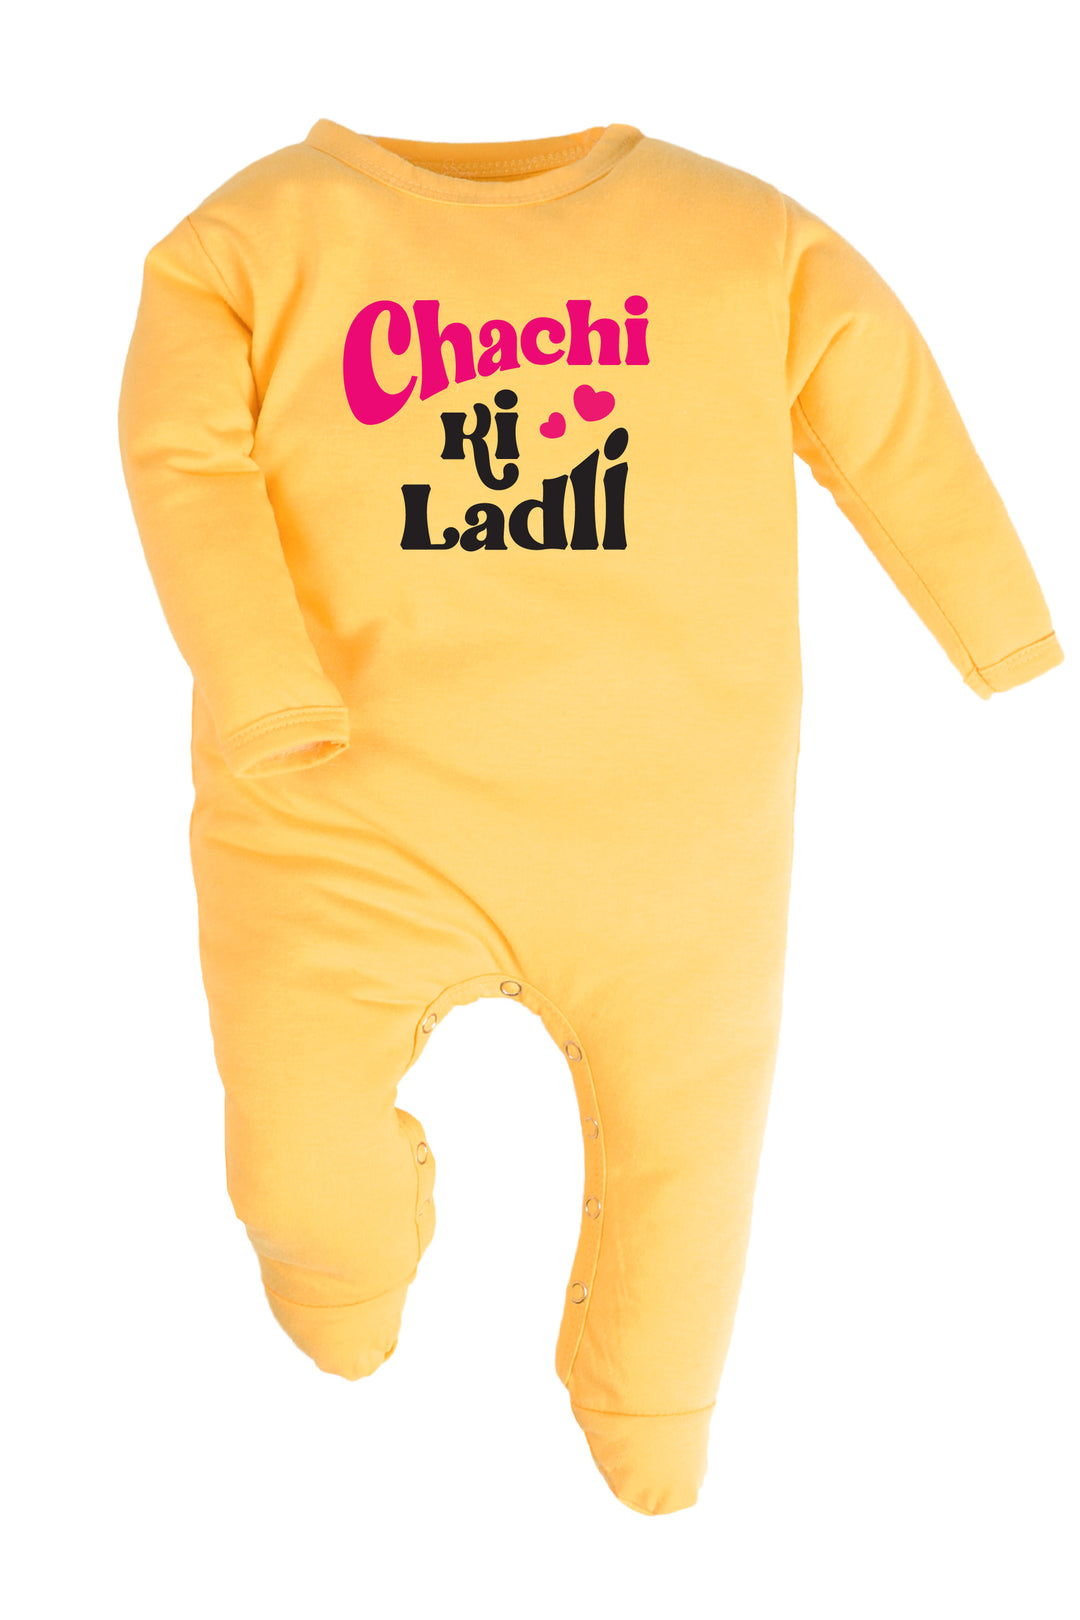 Chachi Ki Ladli Baby Romper | Onesies